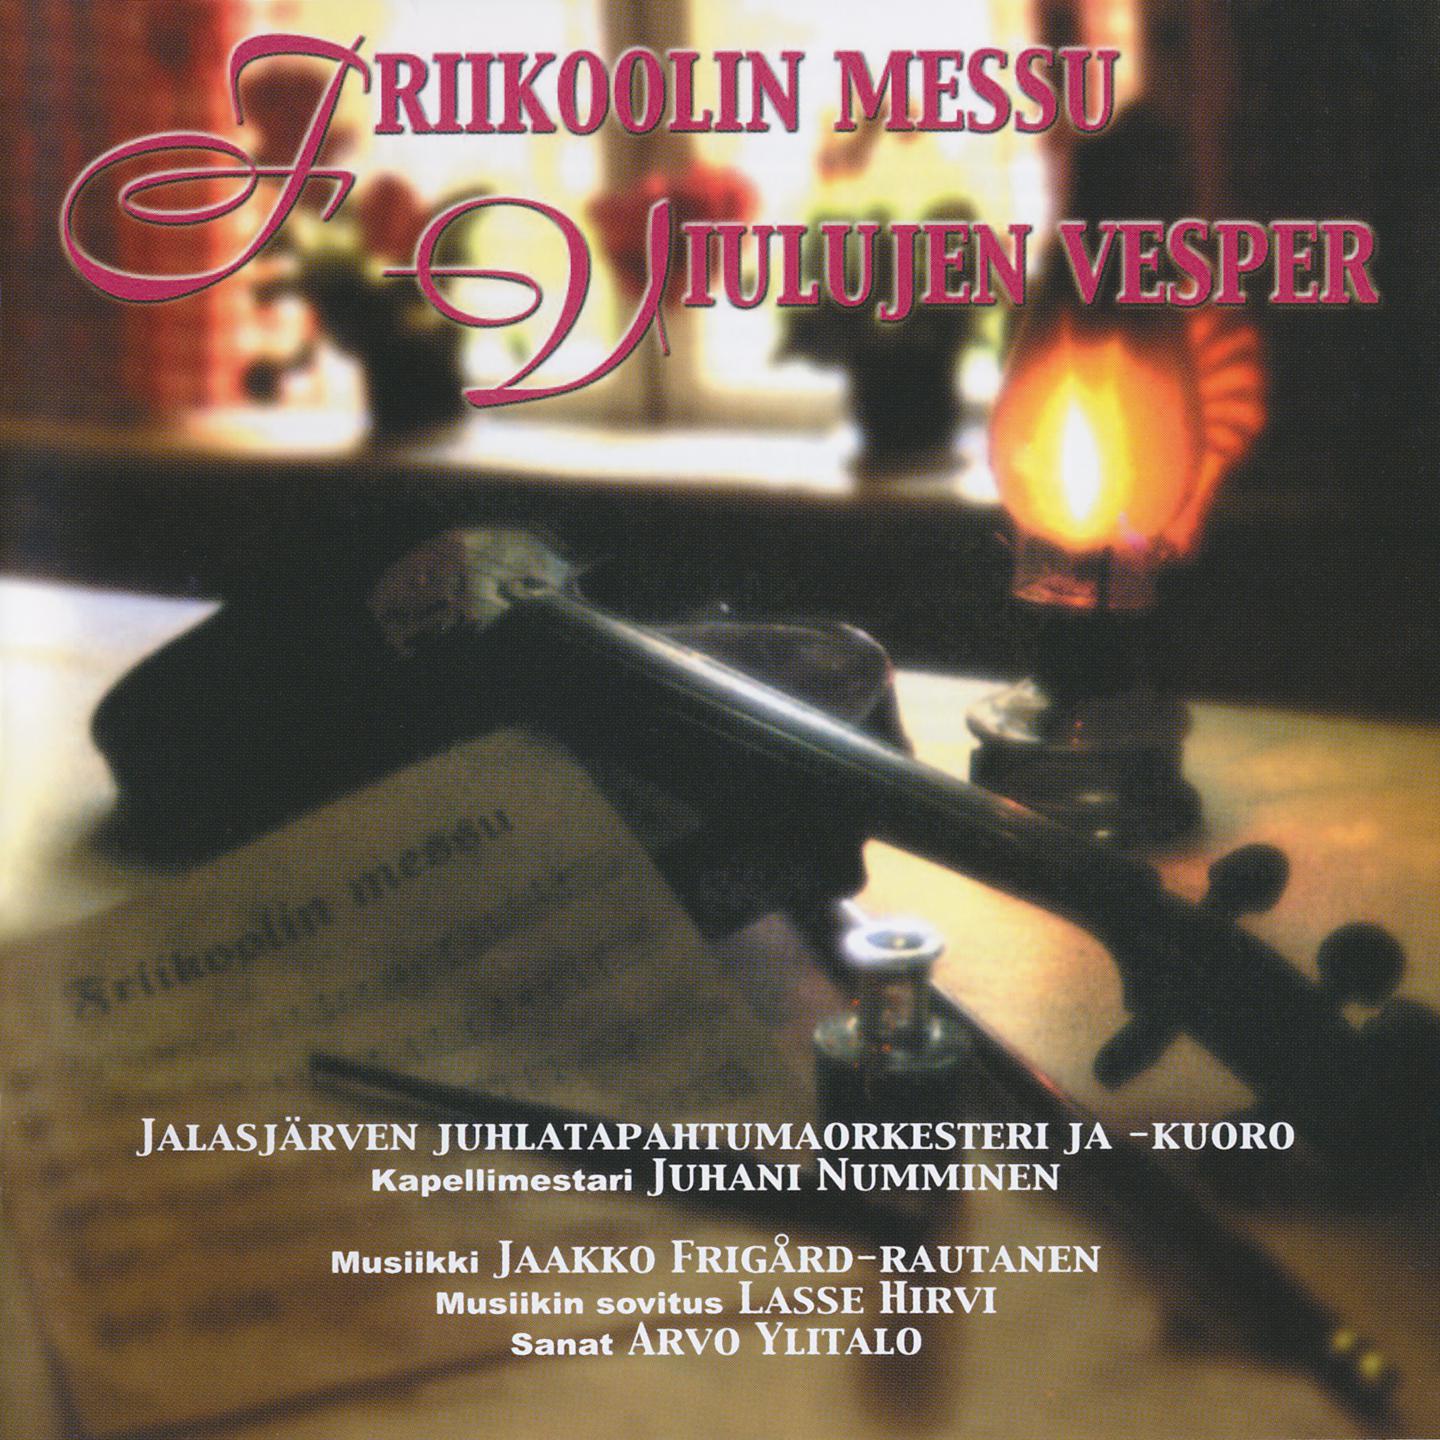 Постер альбома Friikoolin messu - Viulujen Vesper